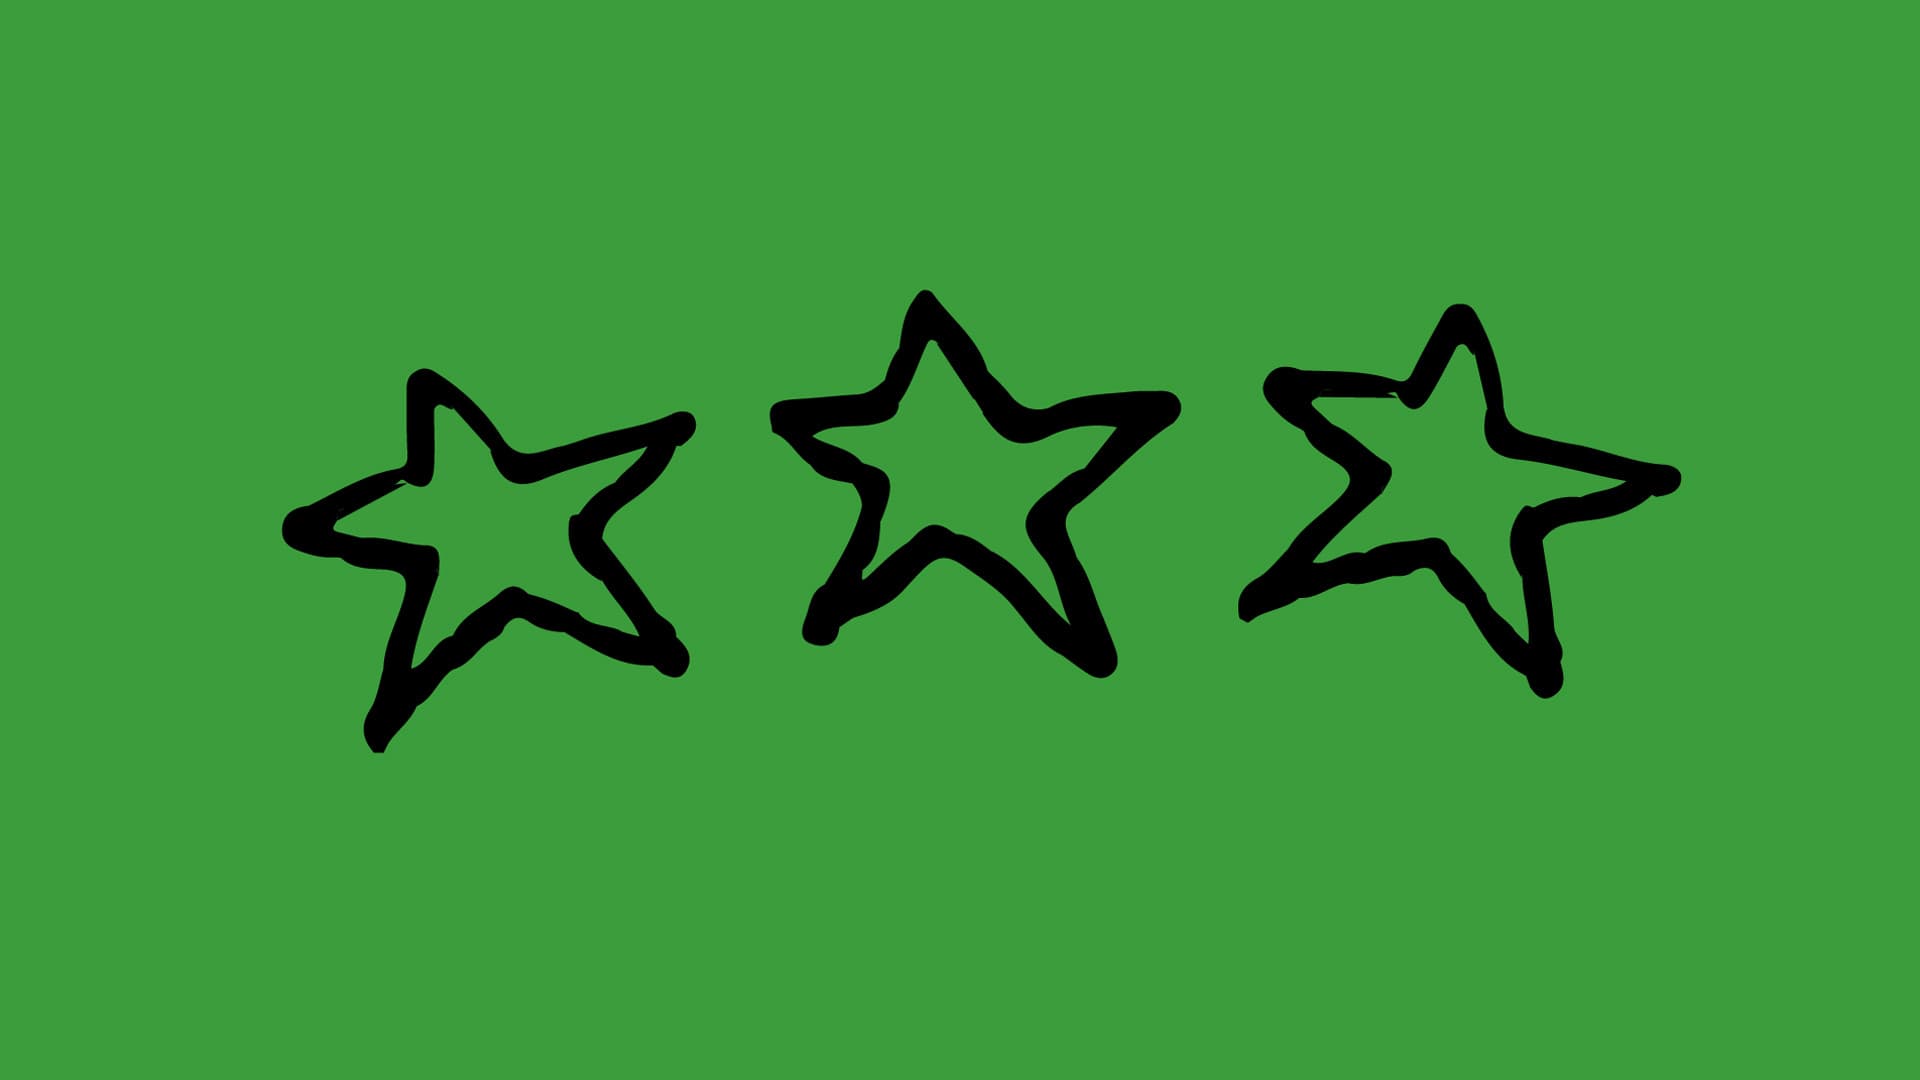 Illustration of three stars on a green background